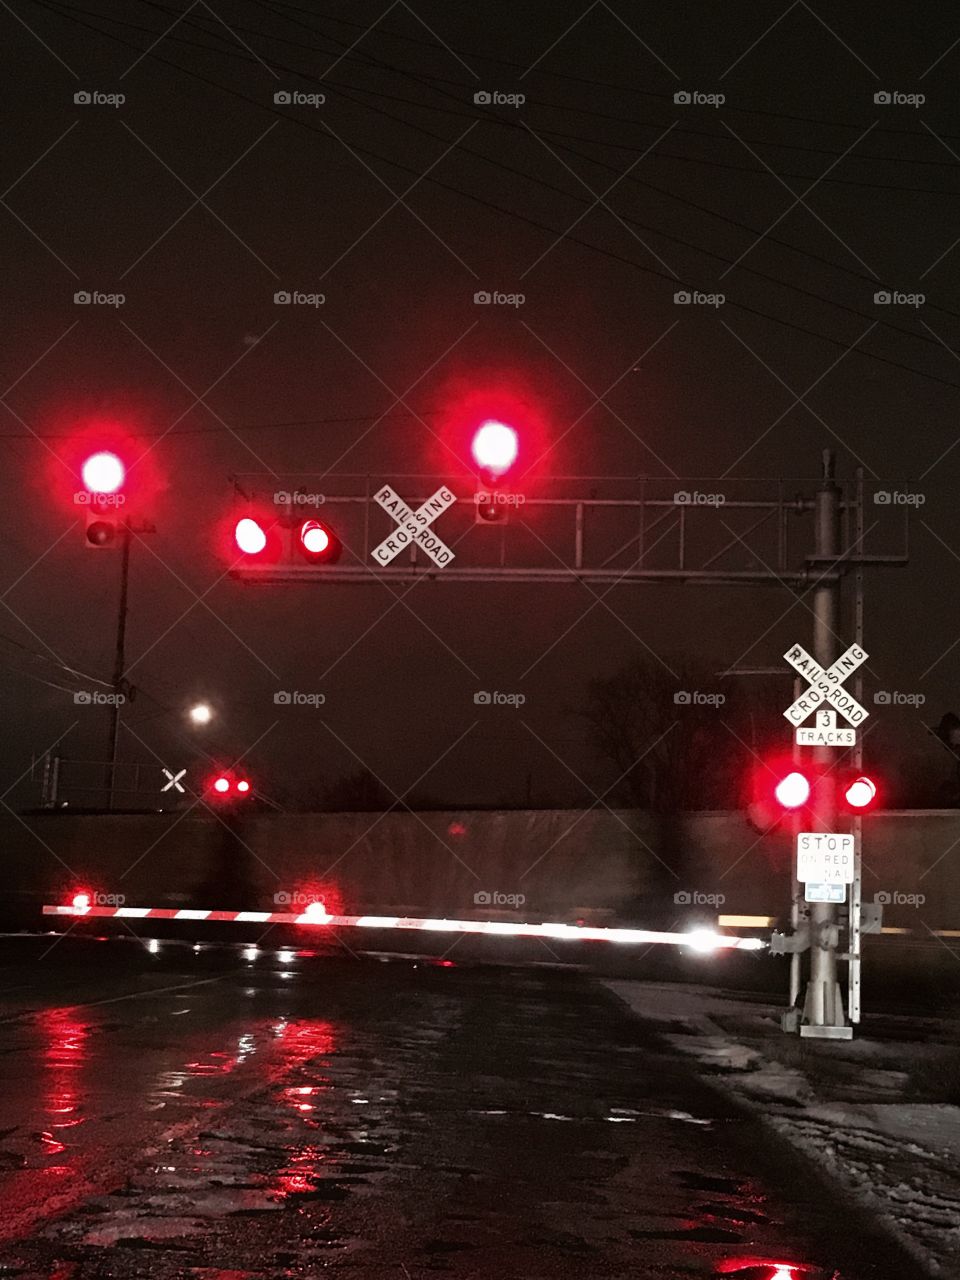 Train lights